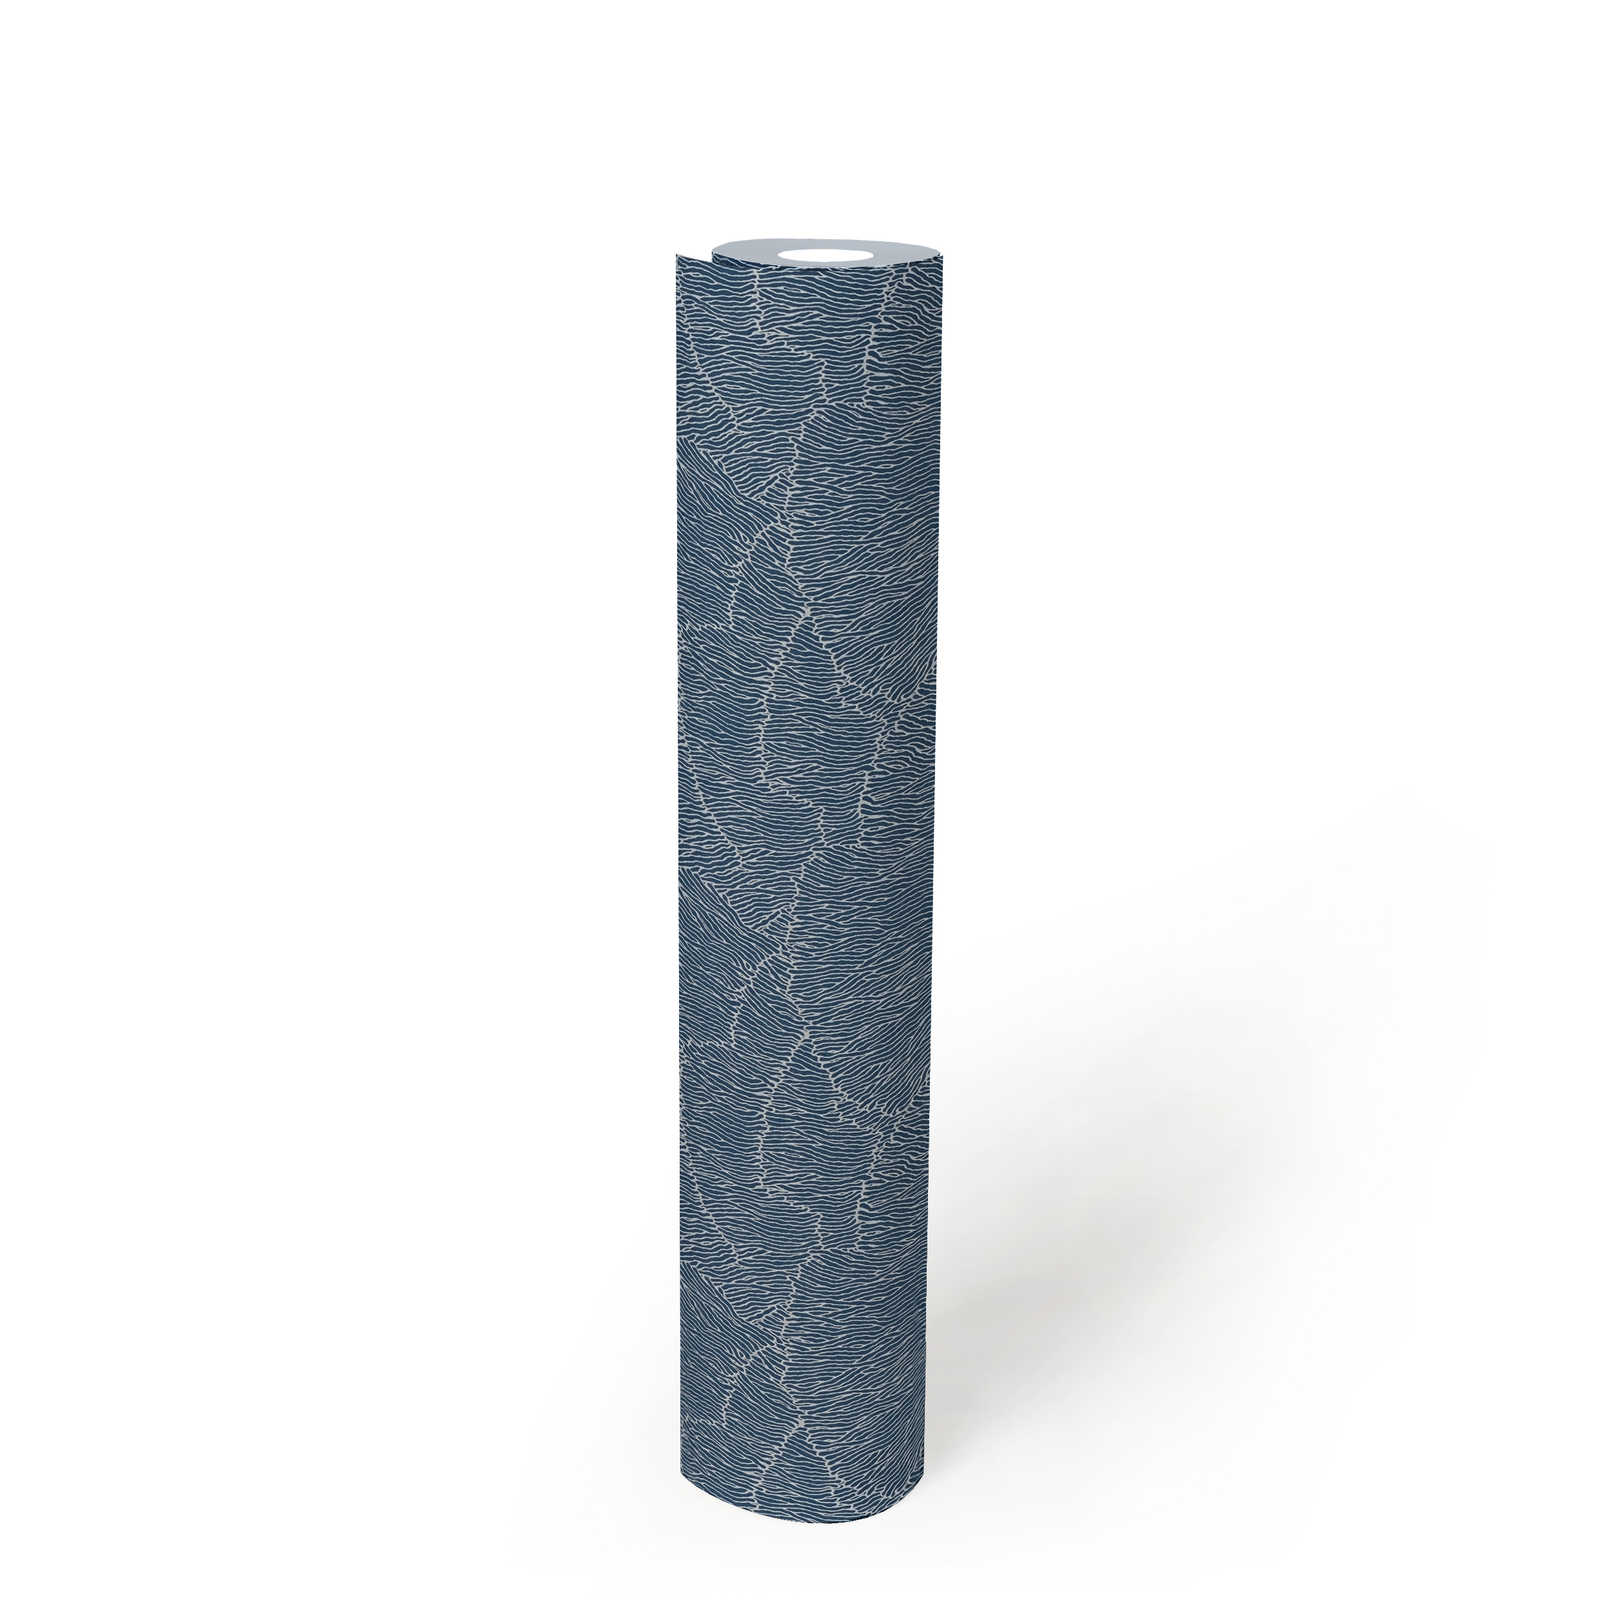             Papel pintado no tejido con motivo de líneas - plateado, azul, metálico
        